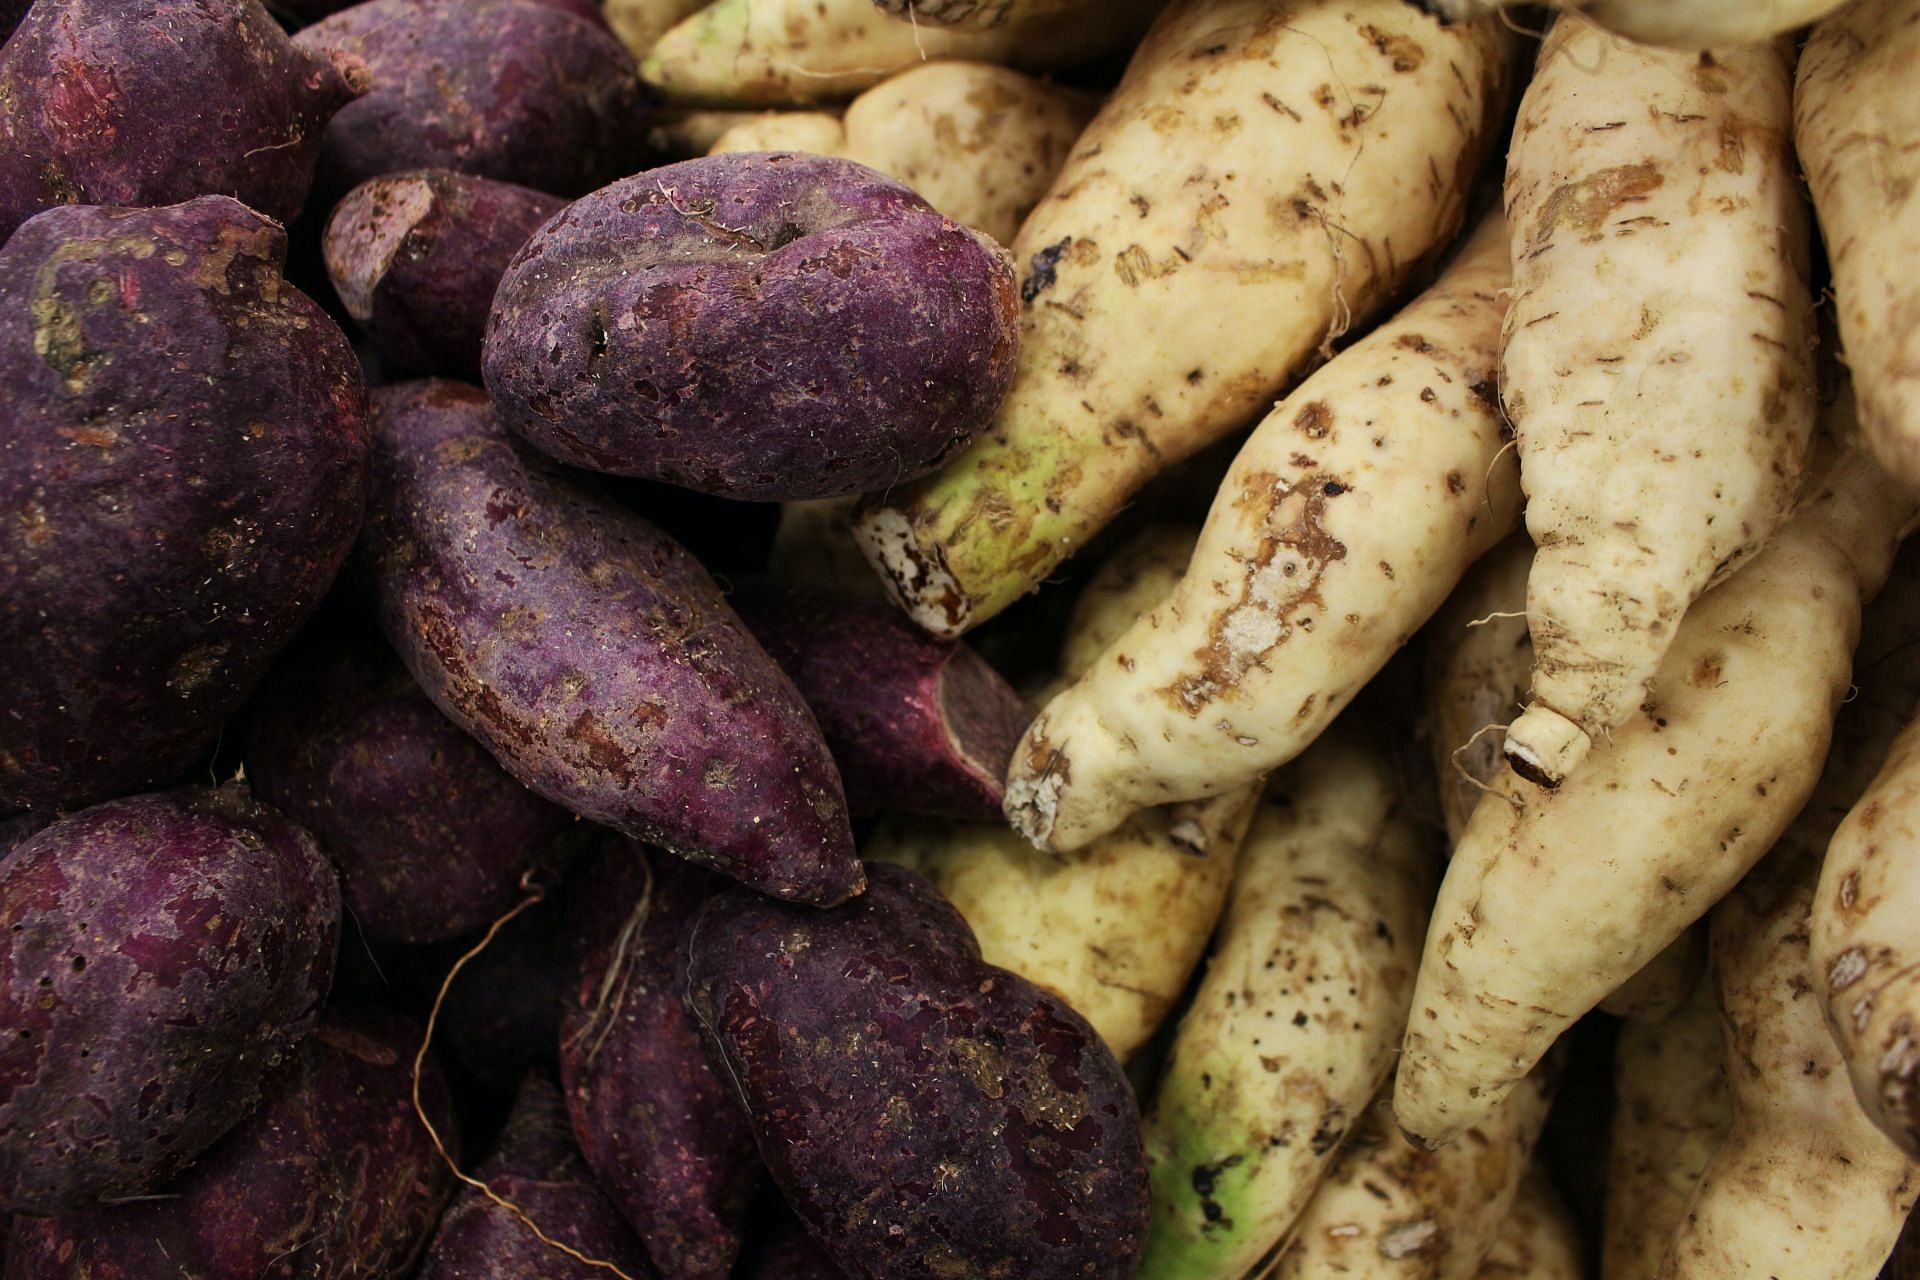 Purple sweet potatoes benefits (image sourced via Pexels / Photo by daniel dan)